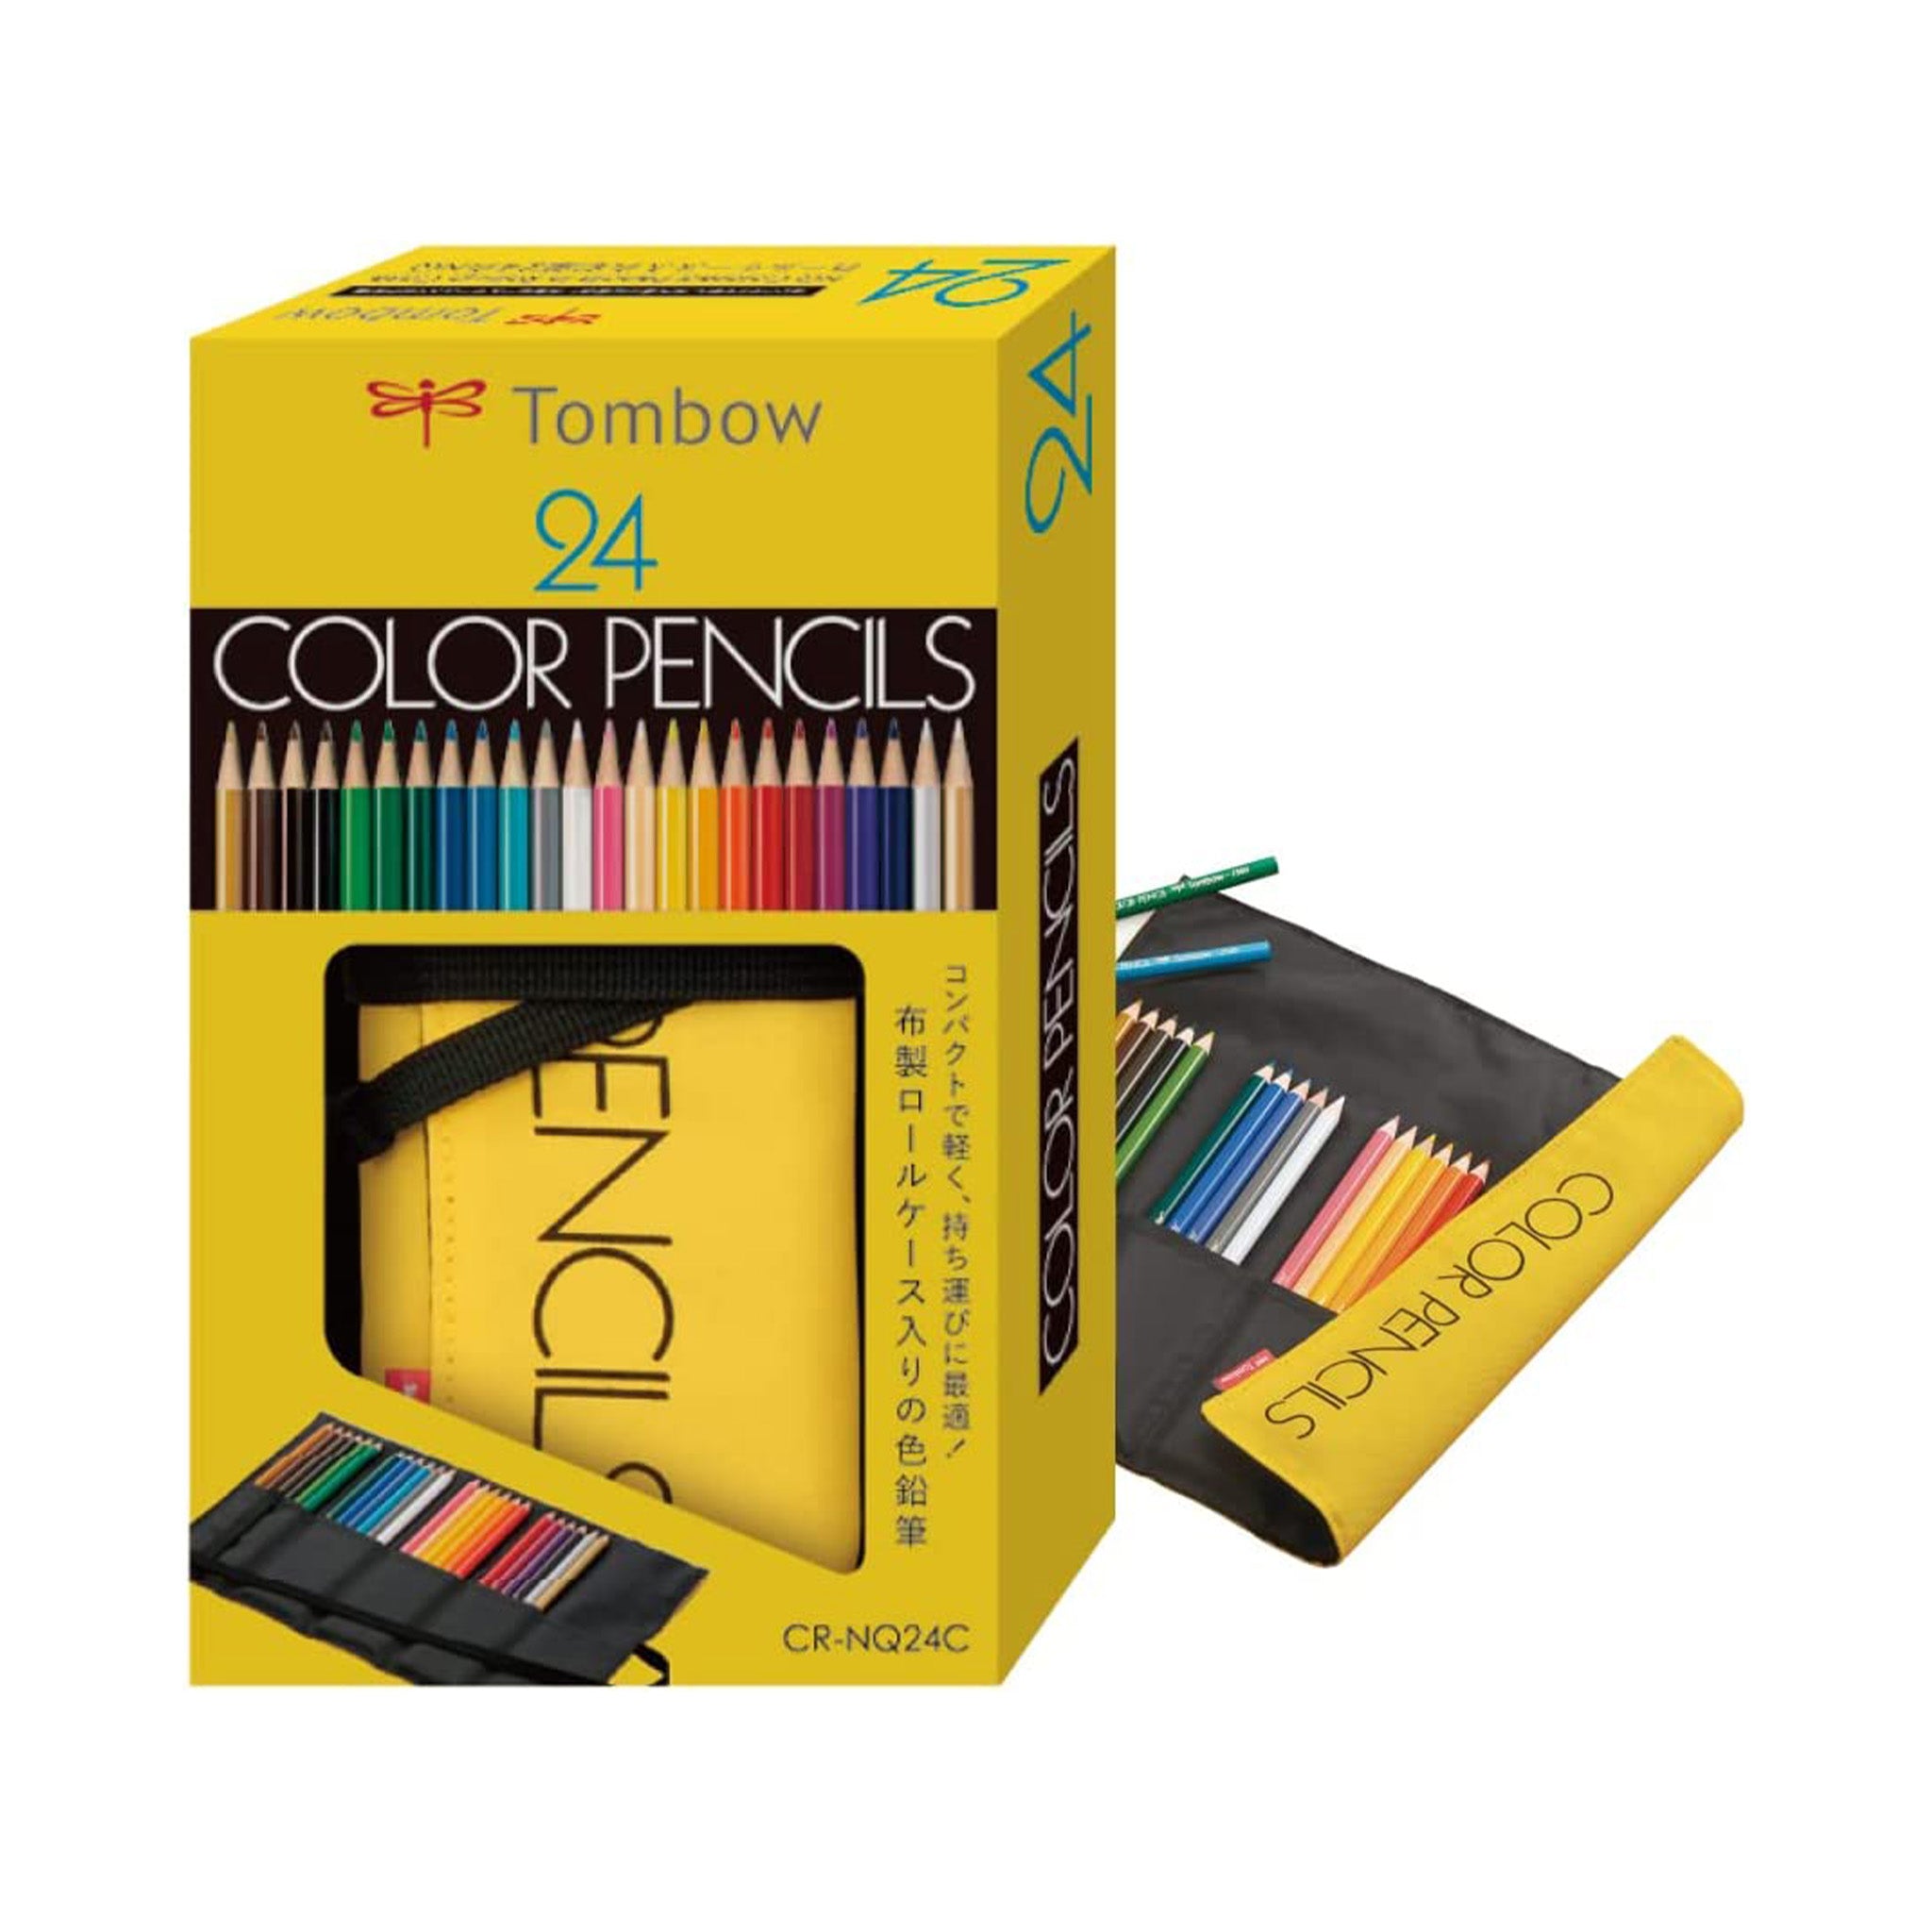 1500 Series Colored Pencils, 24pc Set